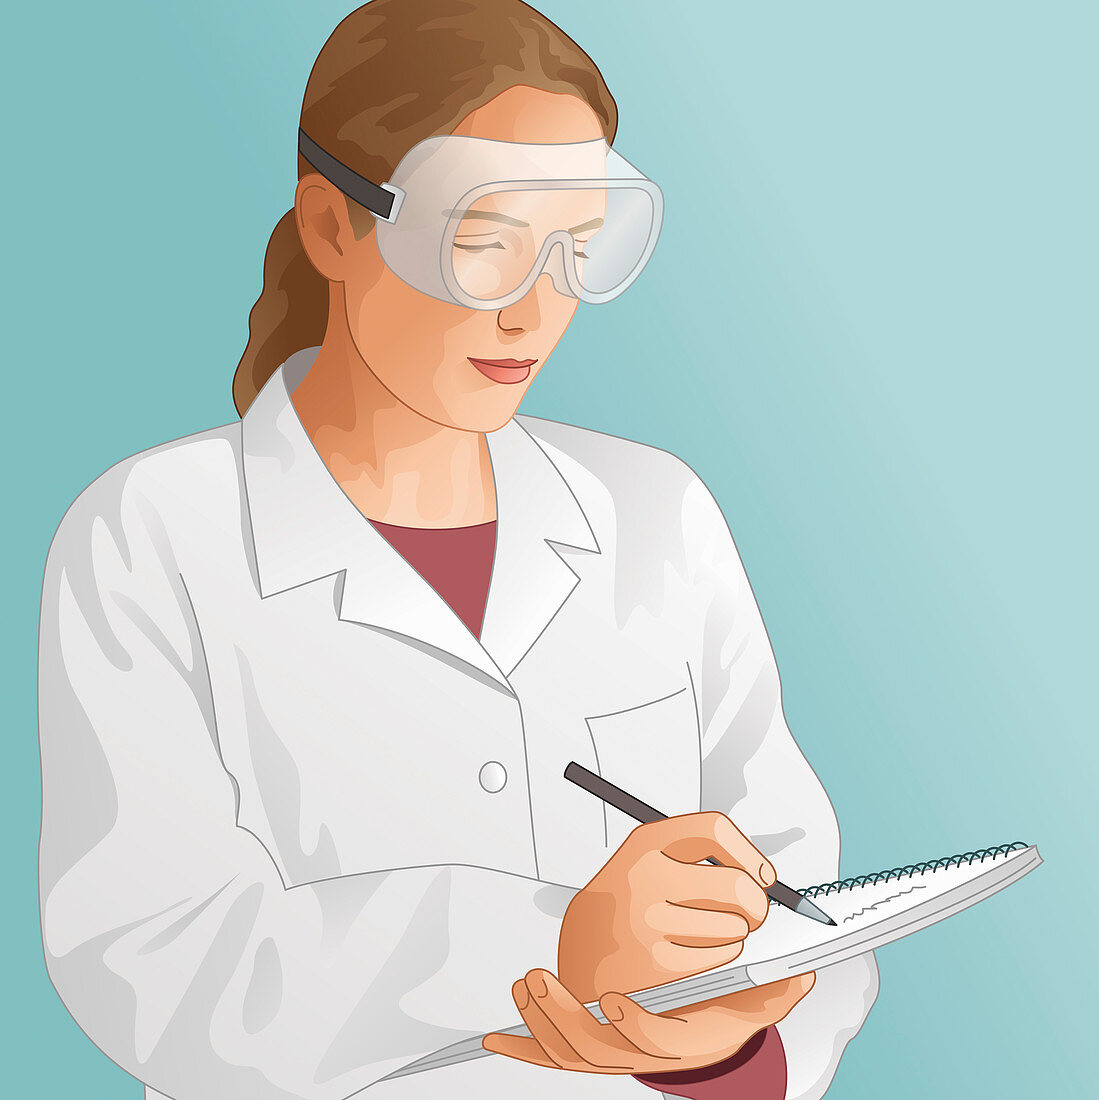 Science laboratory technician, illustration